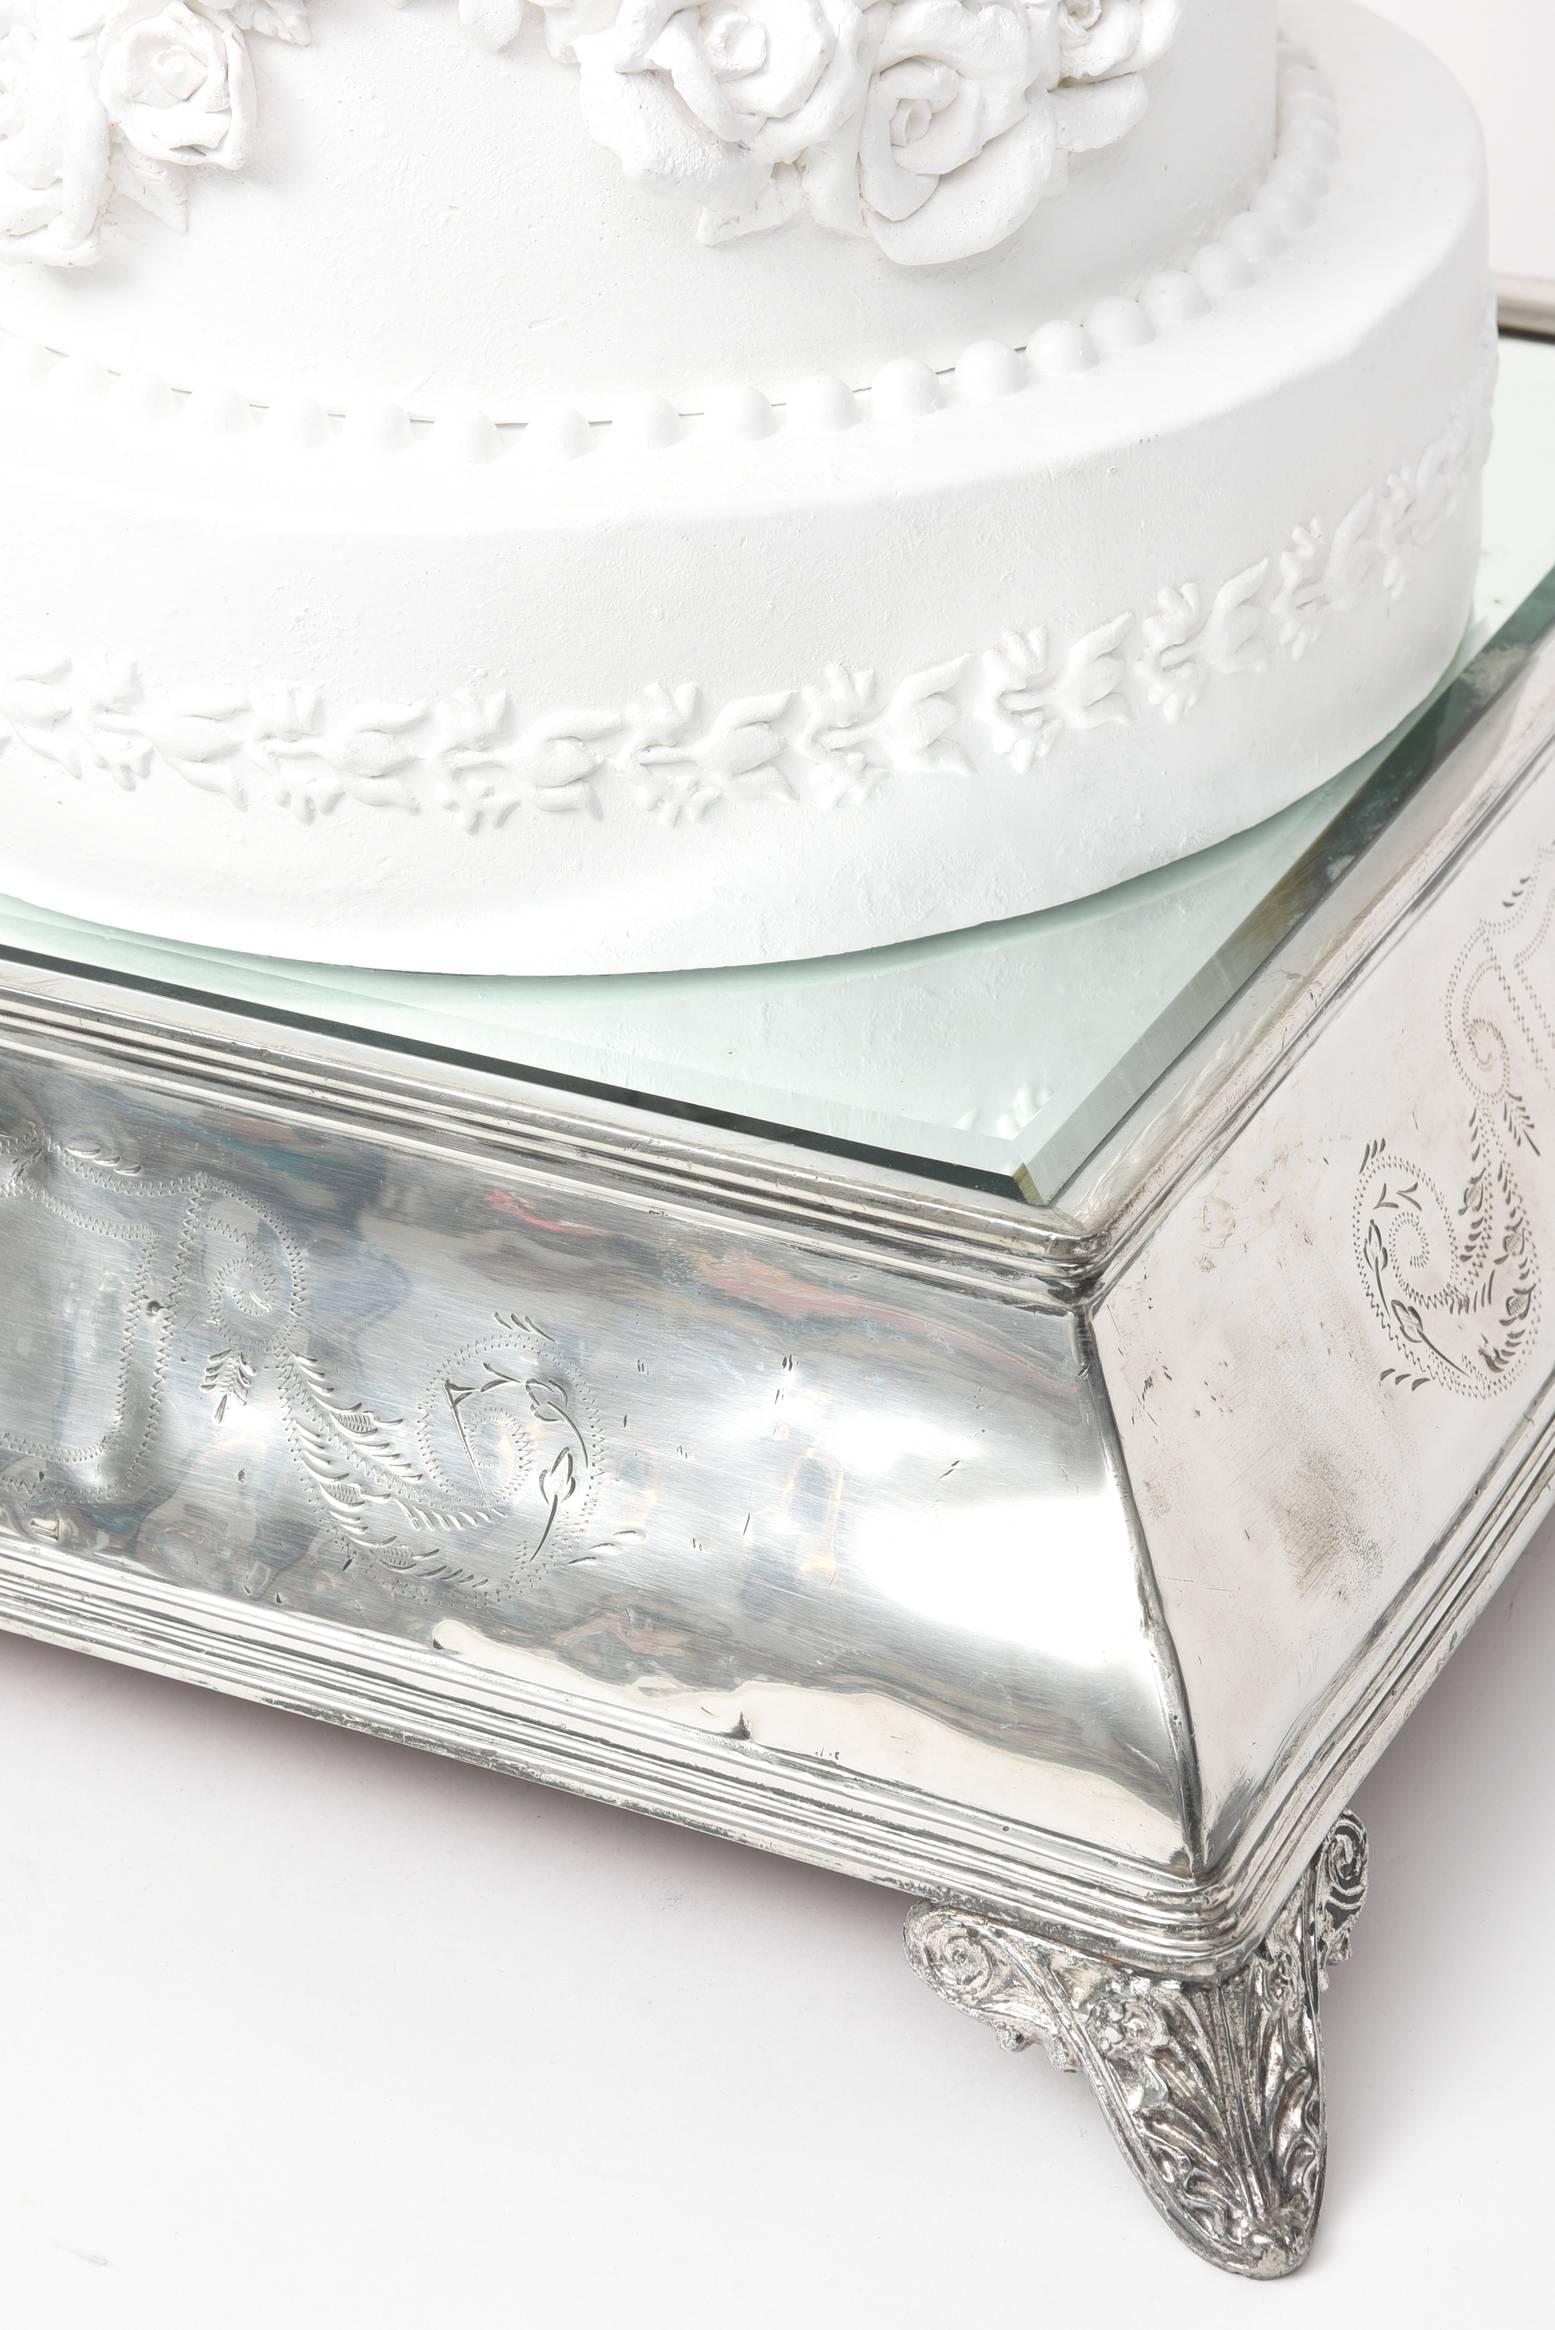 Metalwork Antique Victorian Silver Plate Wedding Cake Stand Plateau Centerpiece